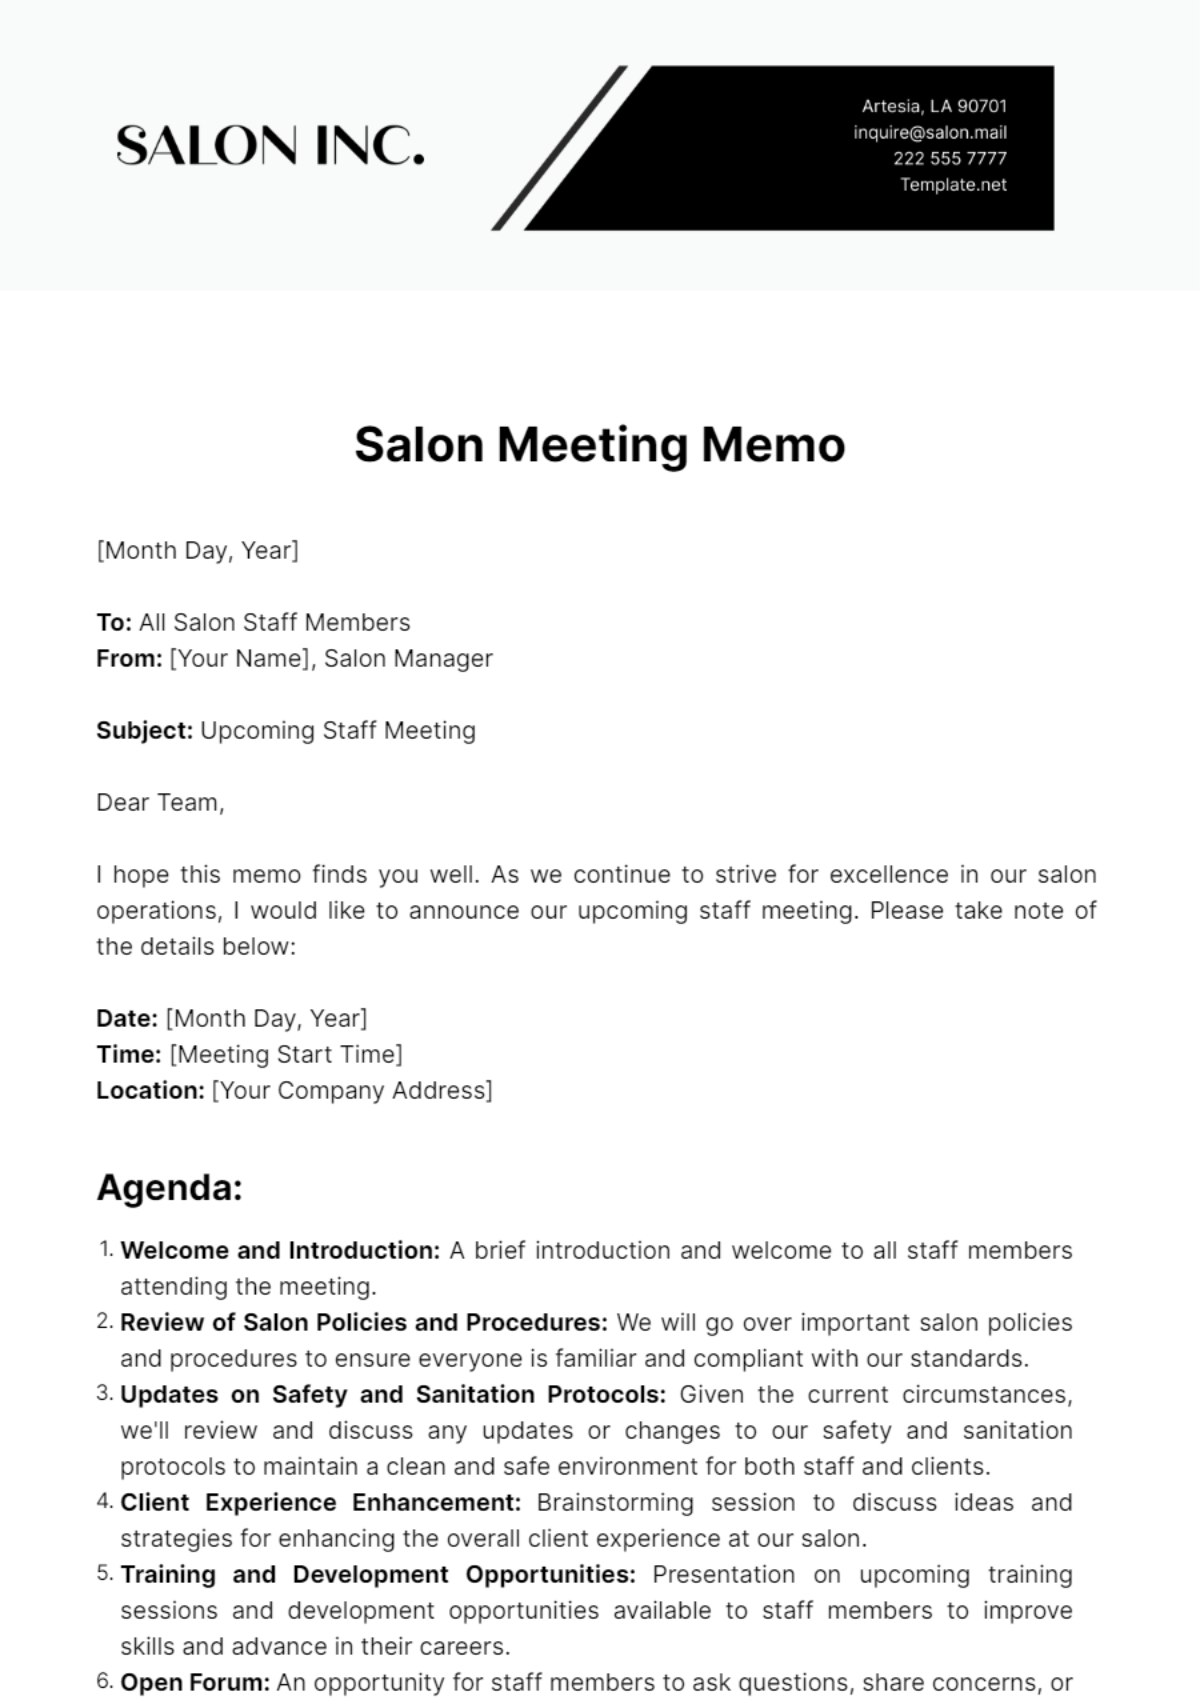 Salon Meeting Memo Template